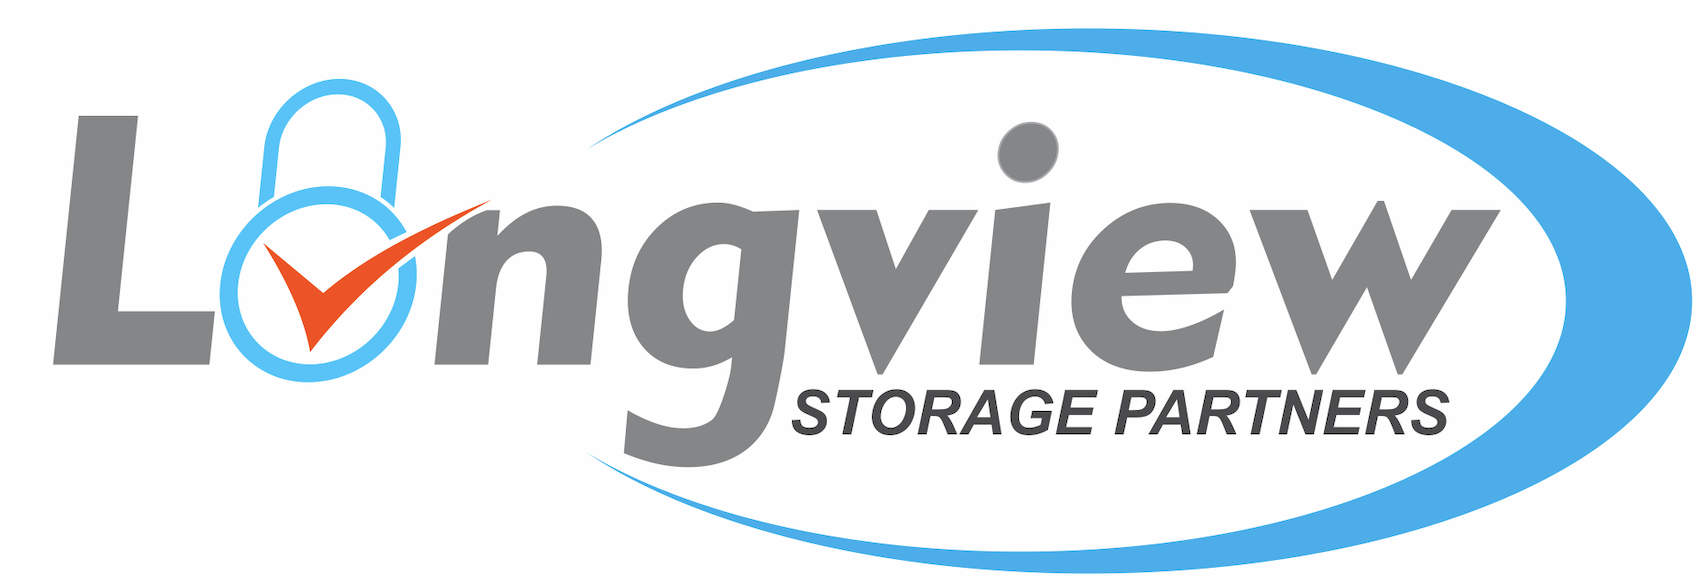 Longview Storage Partners